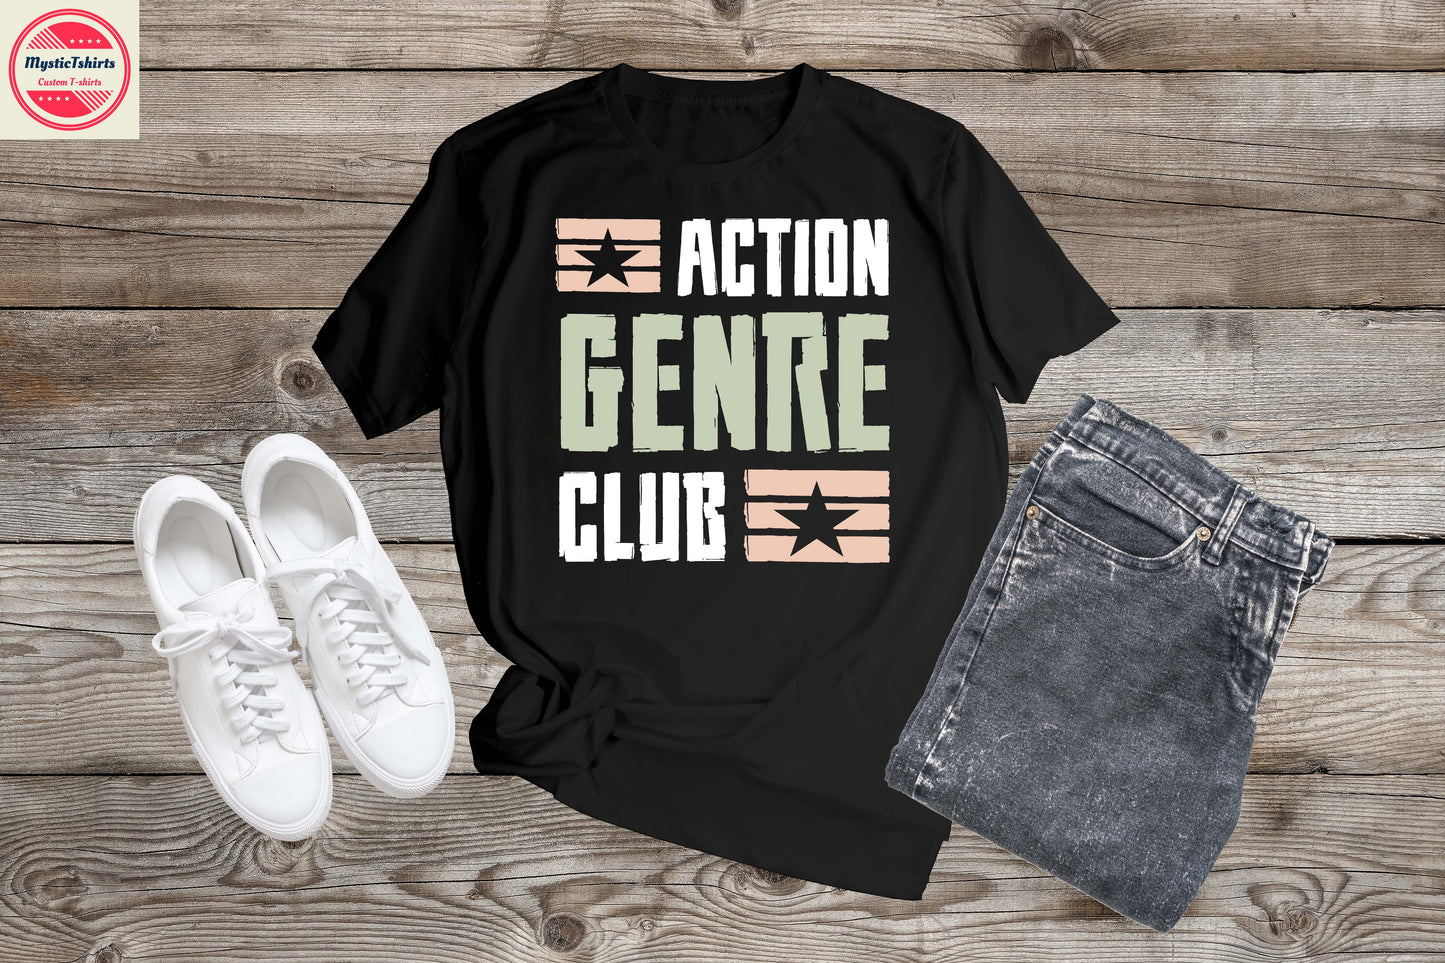 010. ACTION GENRE CLUB, Custom Made Shirt, Personalized T-Shirt, Custom Text, Make Your Own Shirt, Custom Tee